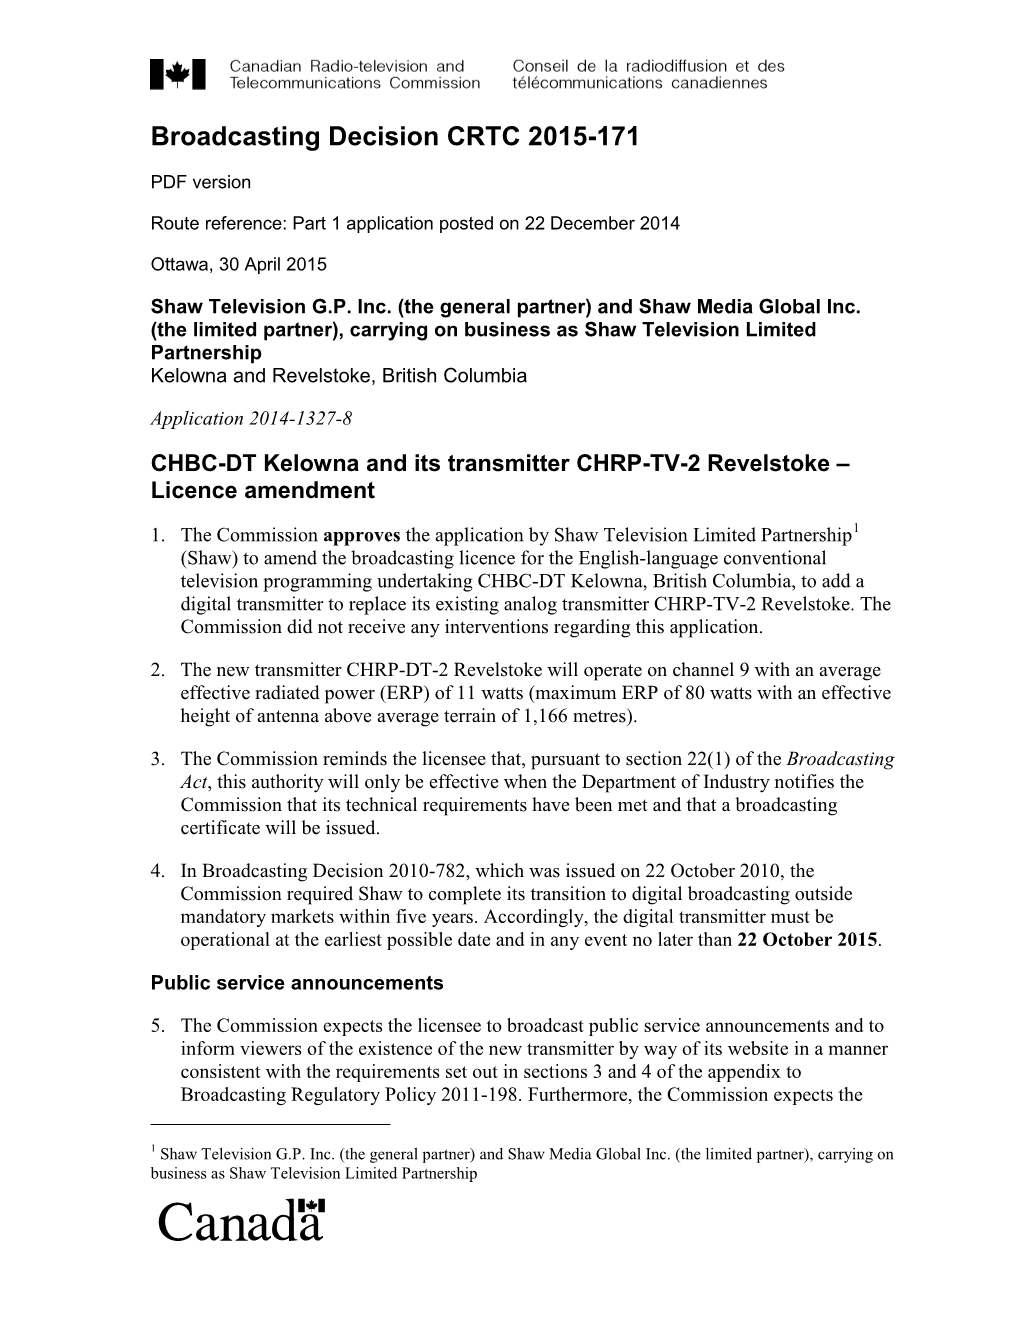 CHBC-DT Kelowna and Its Transmitter CHRP-TV-2 Revelstoke – Licence Amendment